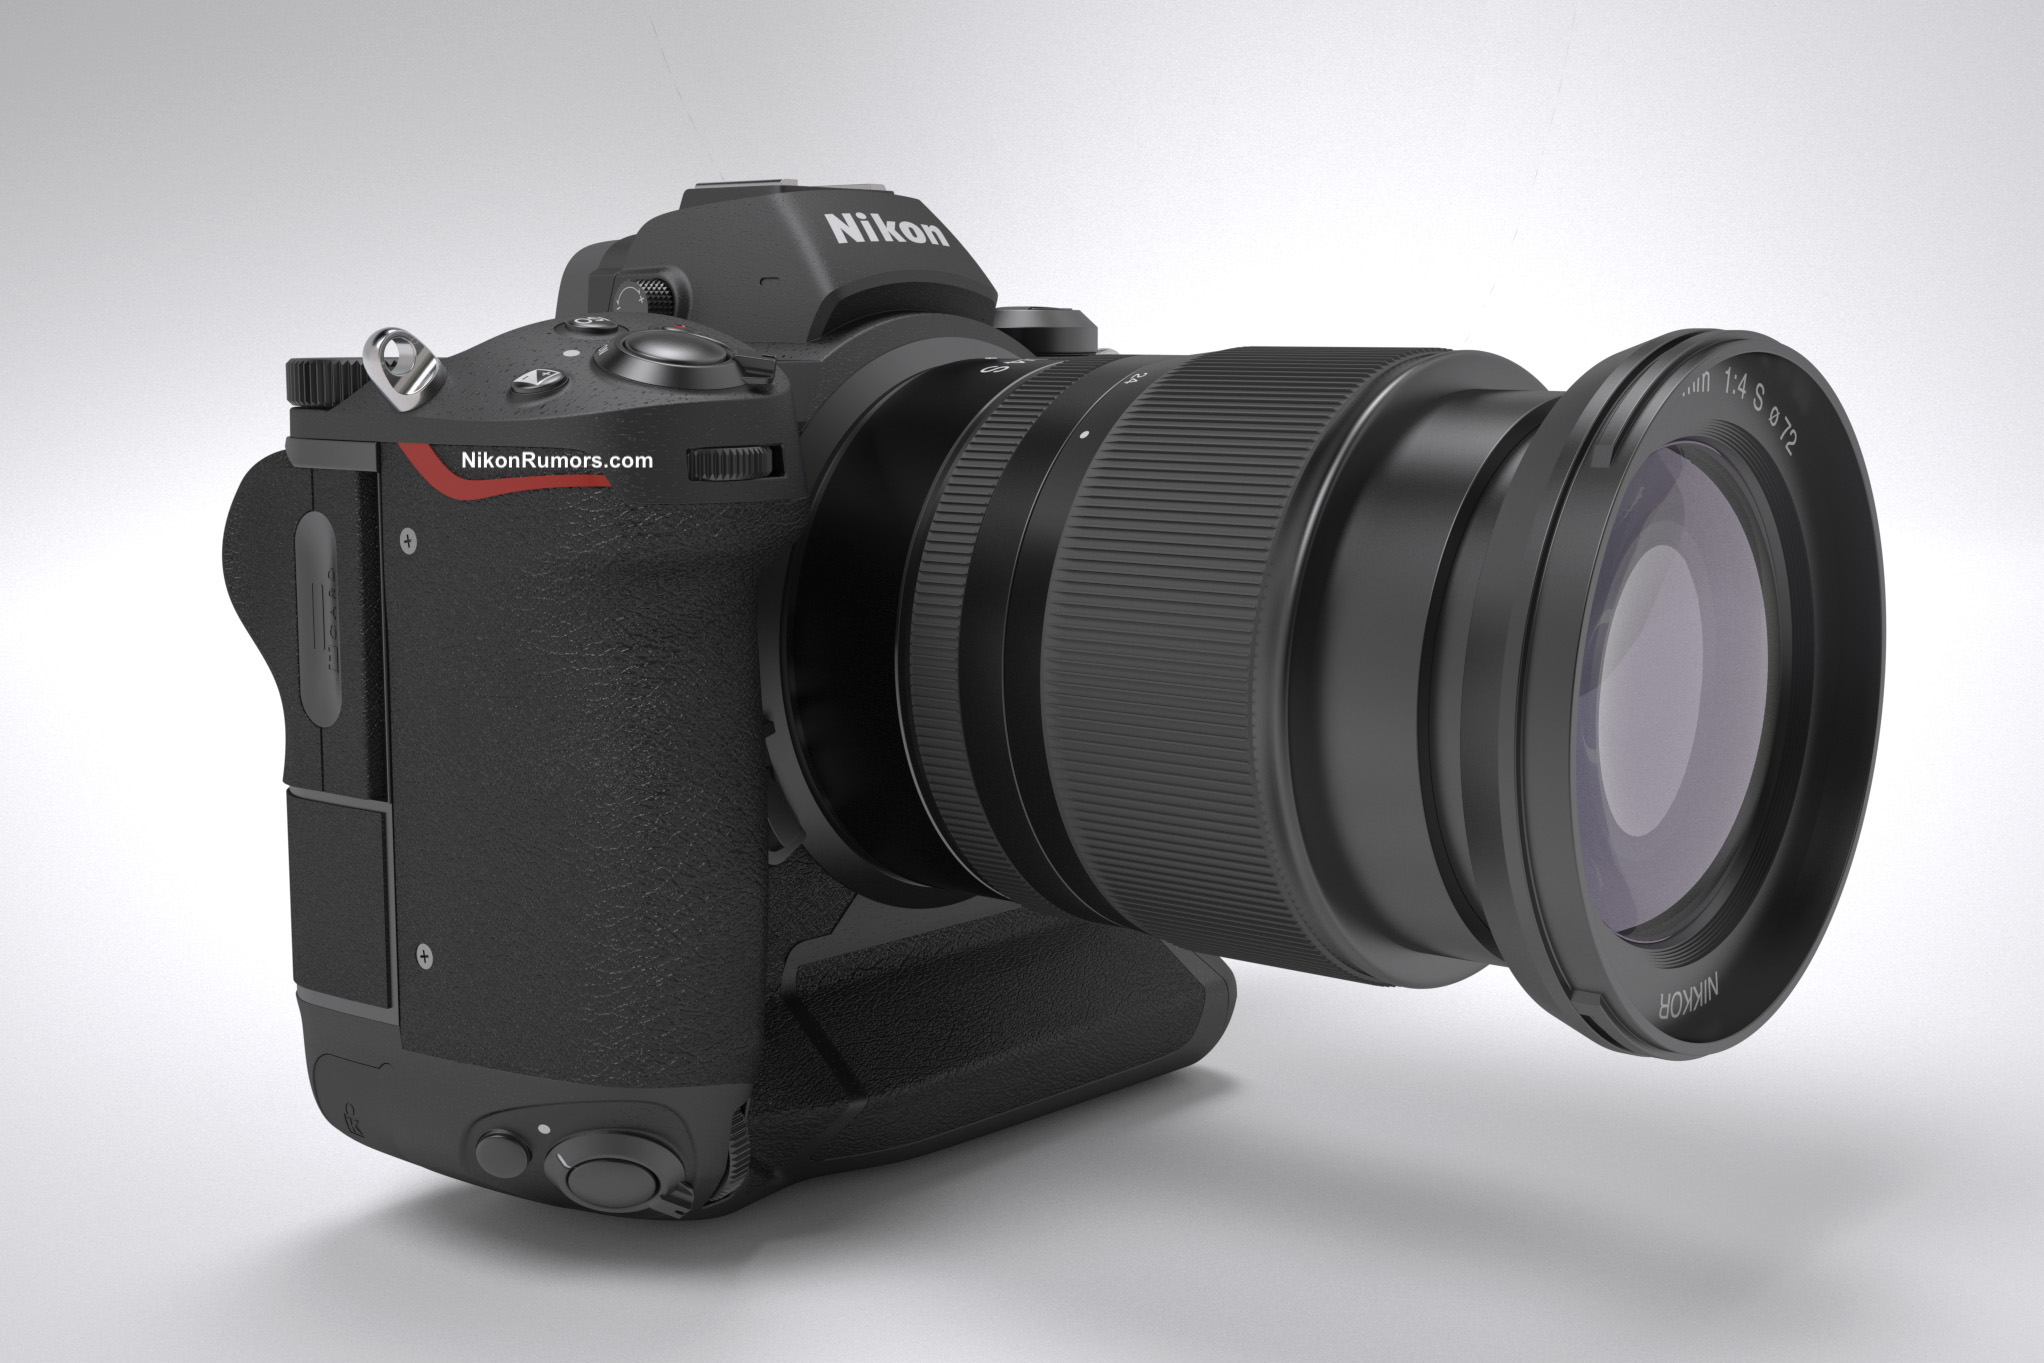 Nikon Z9 mirrorless camera rumored specifications - Photo Rumors